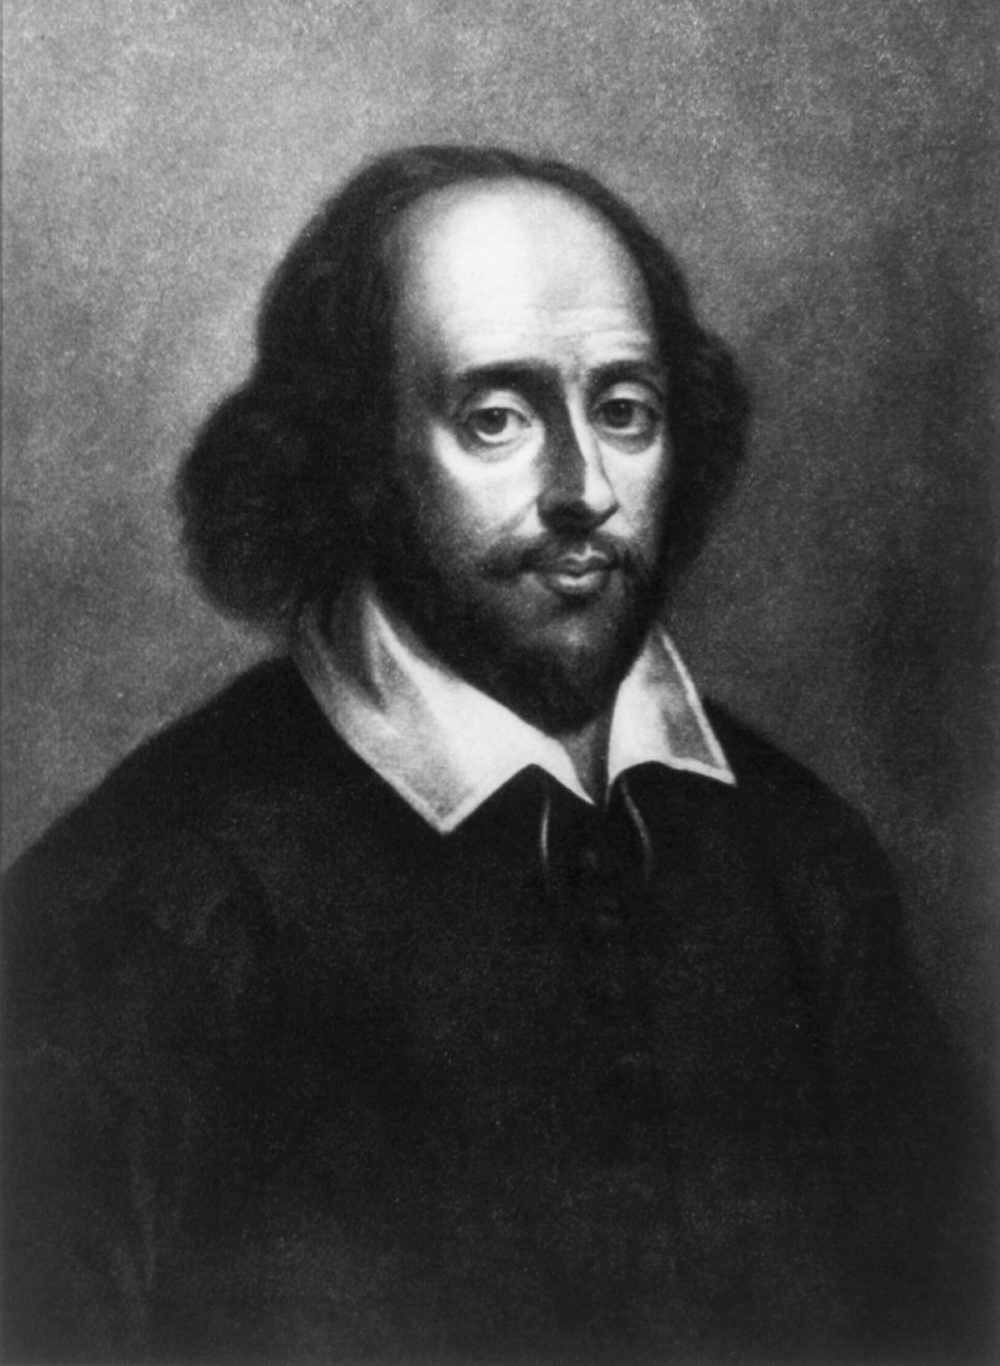 William Shakespeare e1600788717496 - William Shakespeare: Người gửi ước mơ qua từng vở kịch